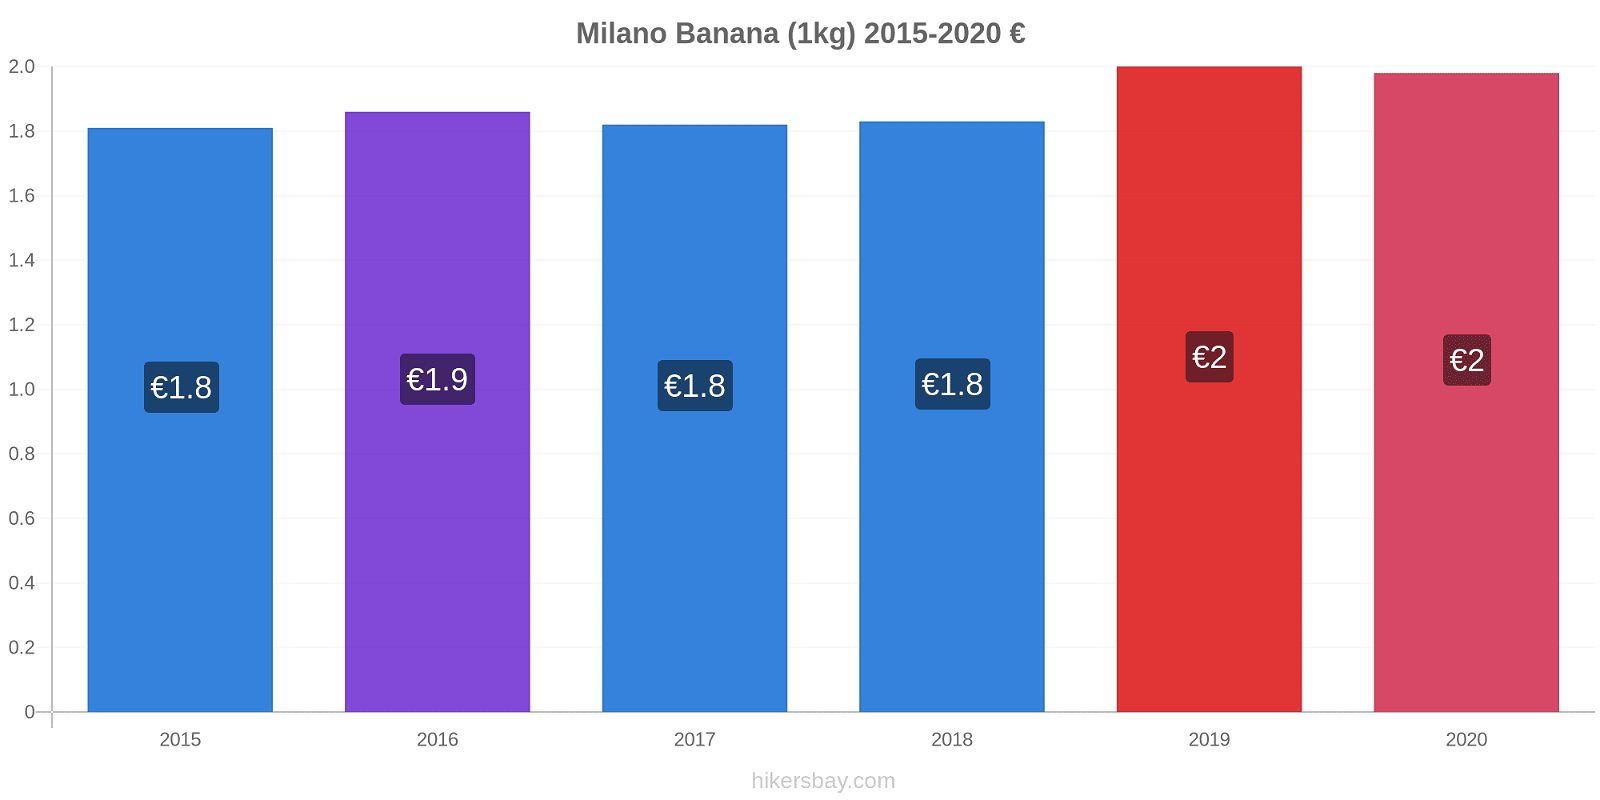 Milano modificări de preț Banana (1kg) hikersbay.com